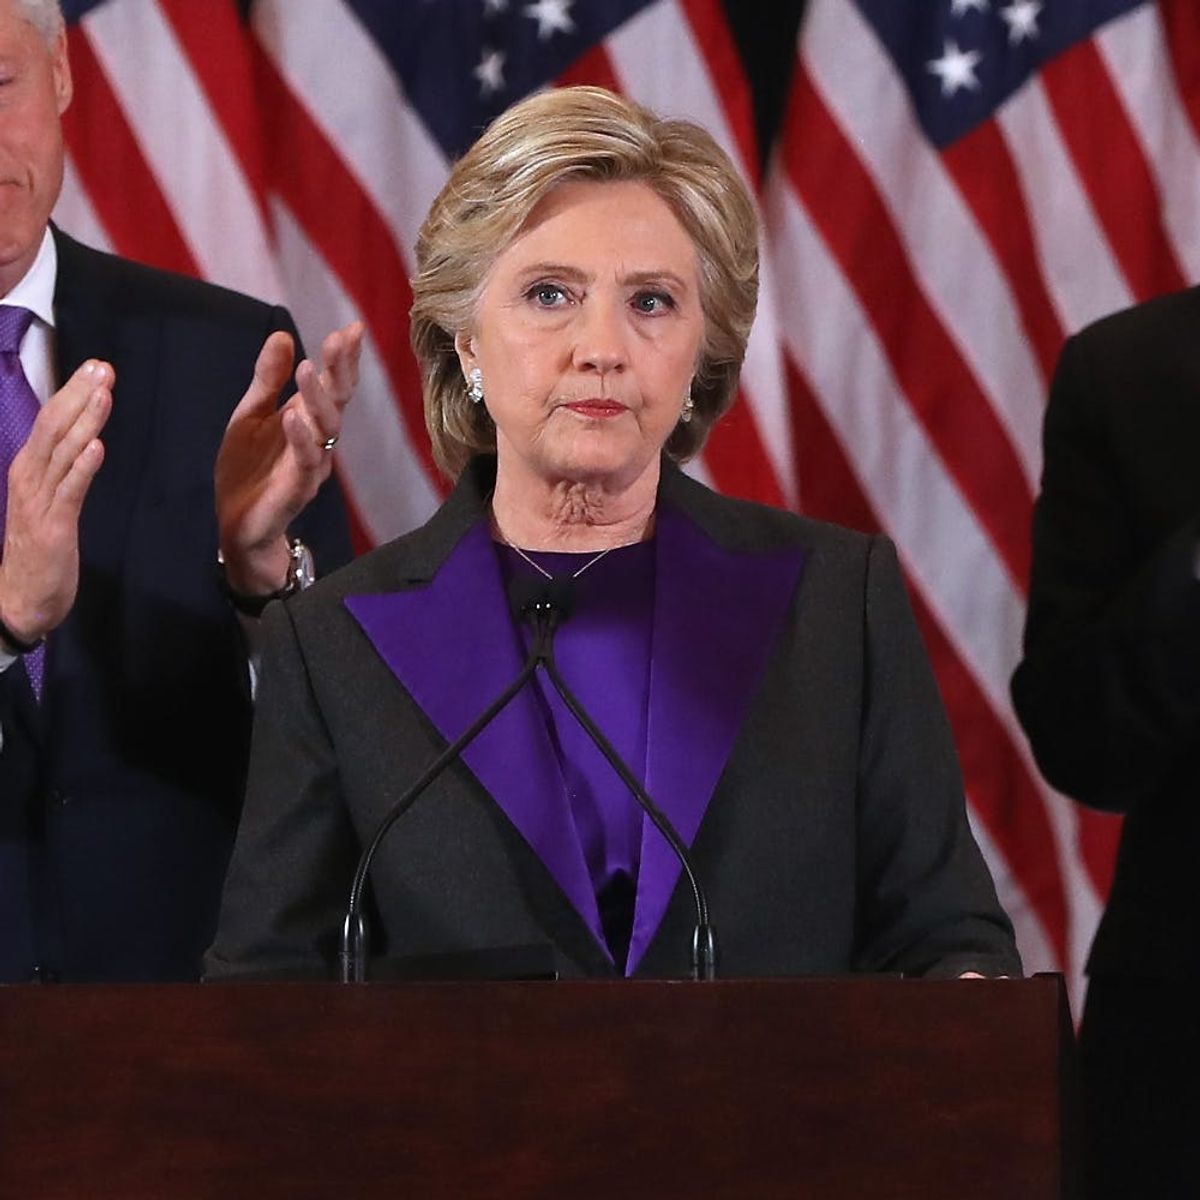 Hillary’s Concession Speech Suit Carries a Powerful Secret Message